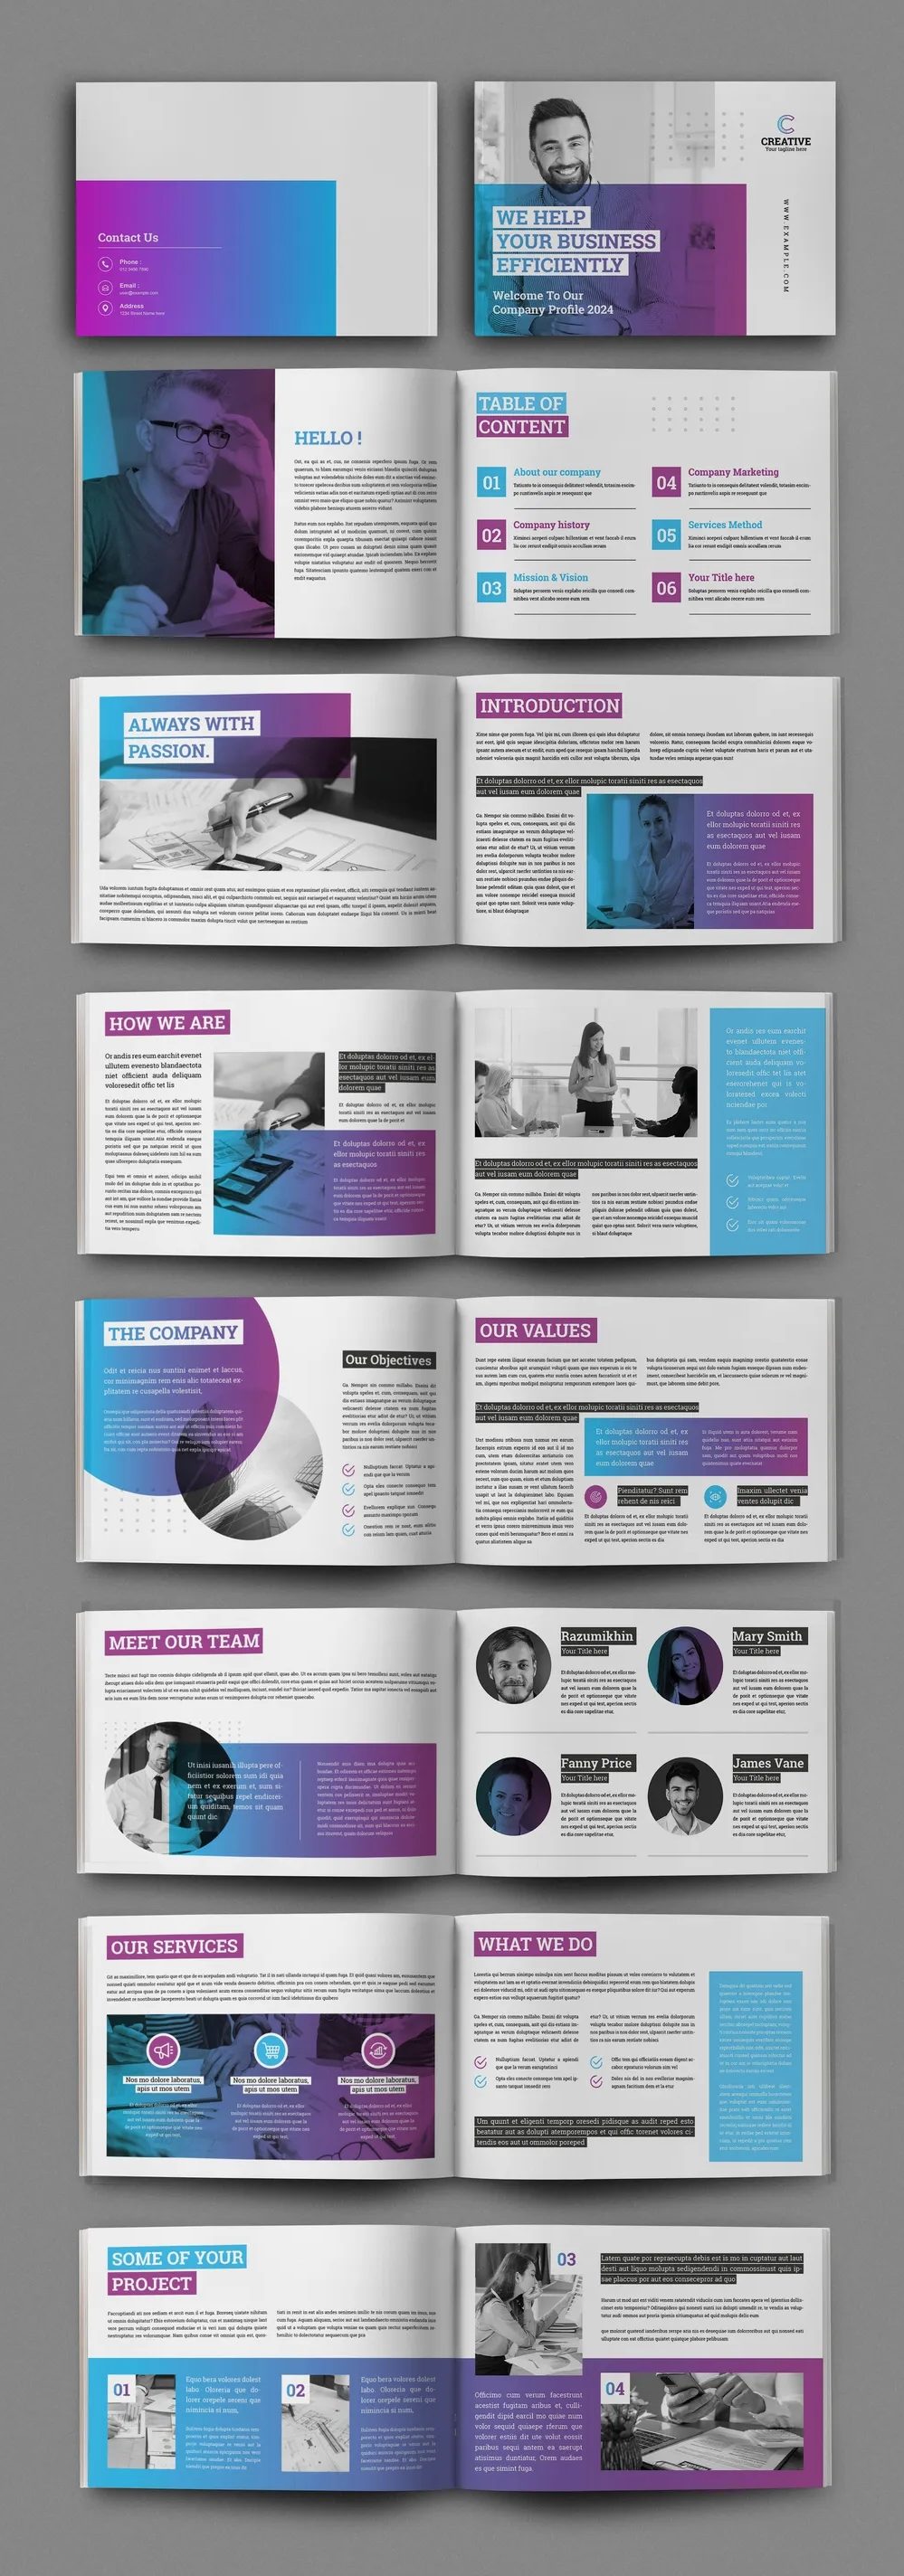 Adobestock - Colorful Company Brochure Template 723806352